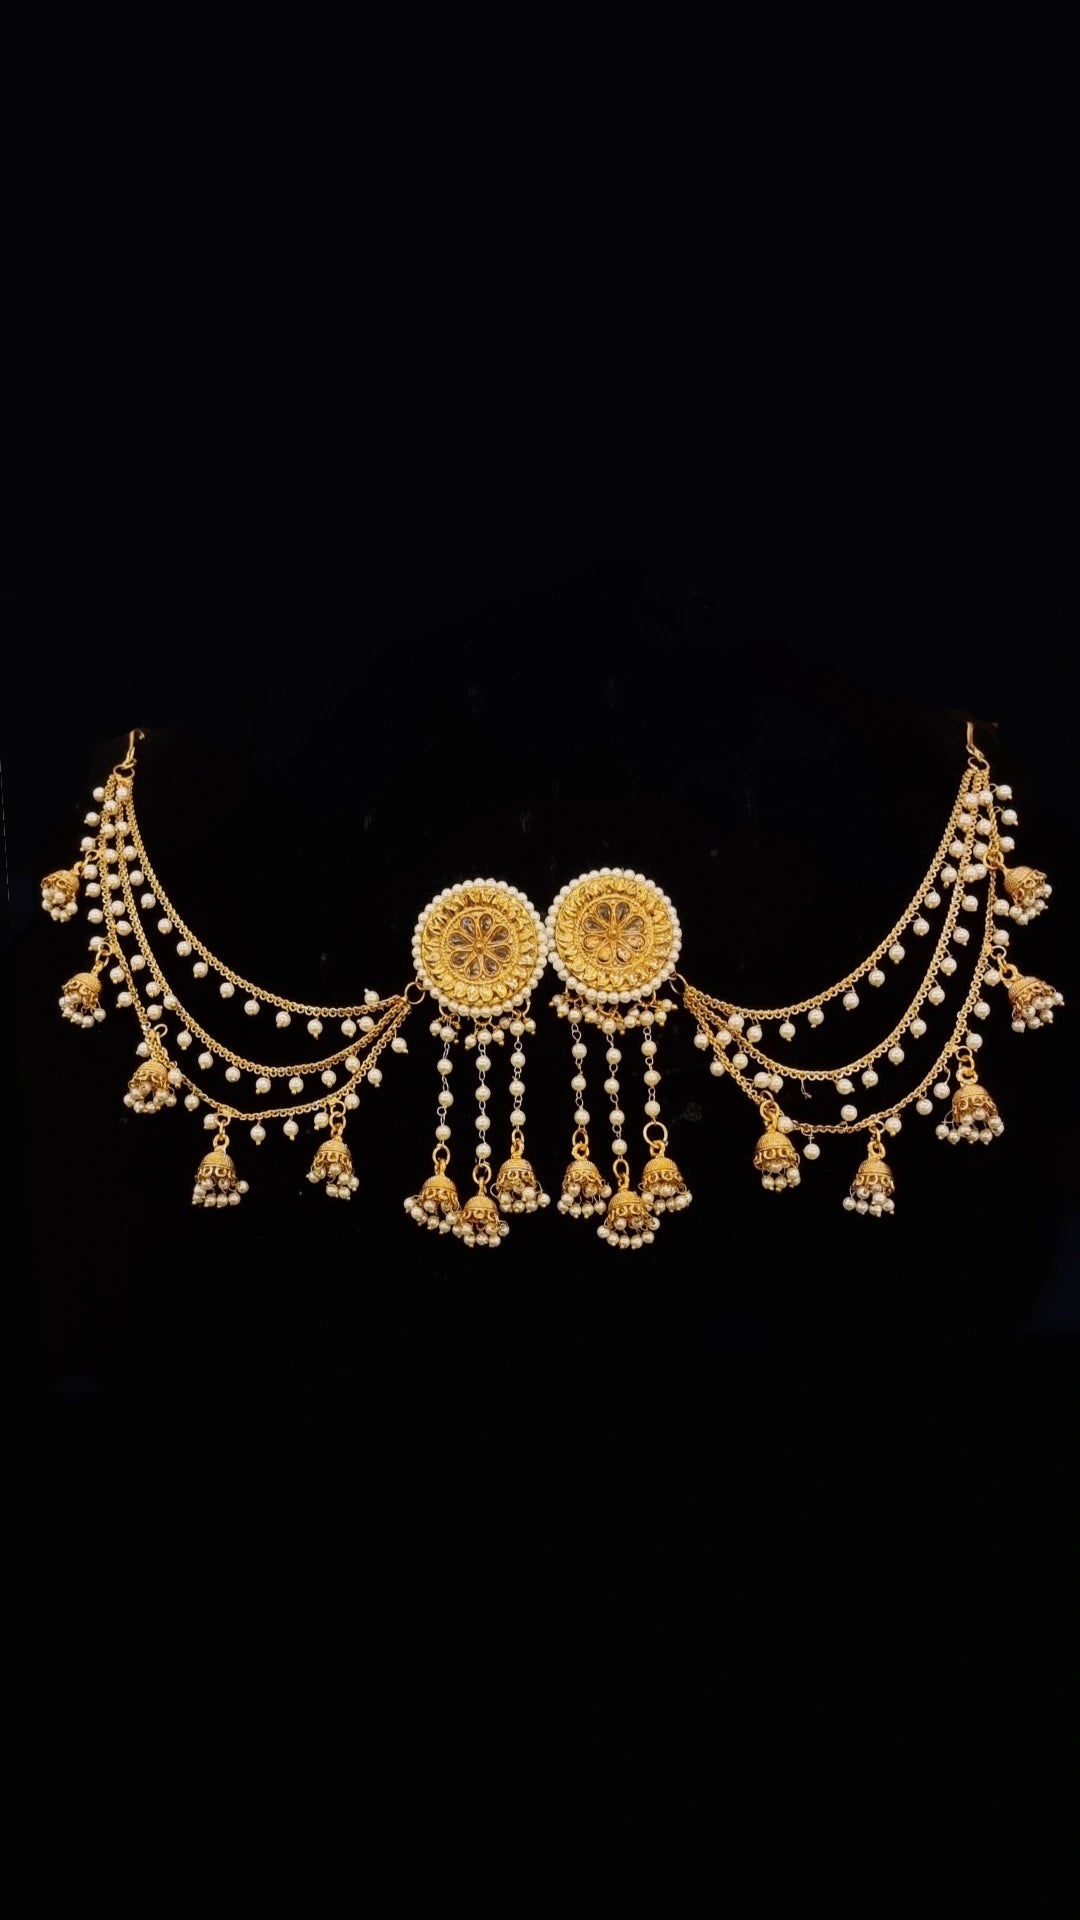 Mirror Bahubali Earrings in White By Pink Box Jewellery - Pink Box Jewellery